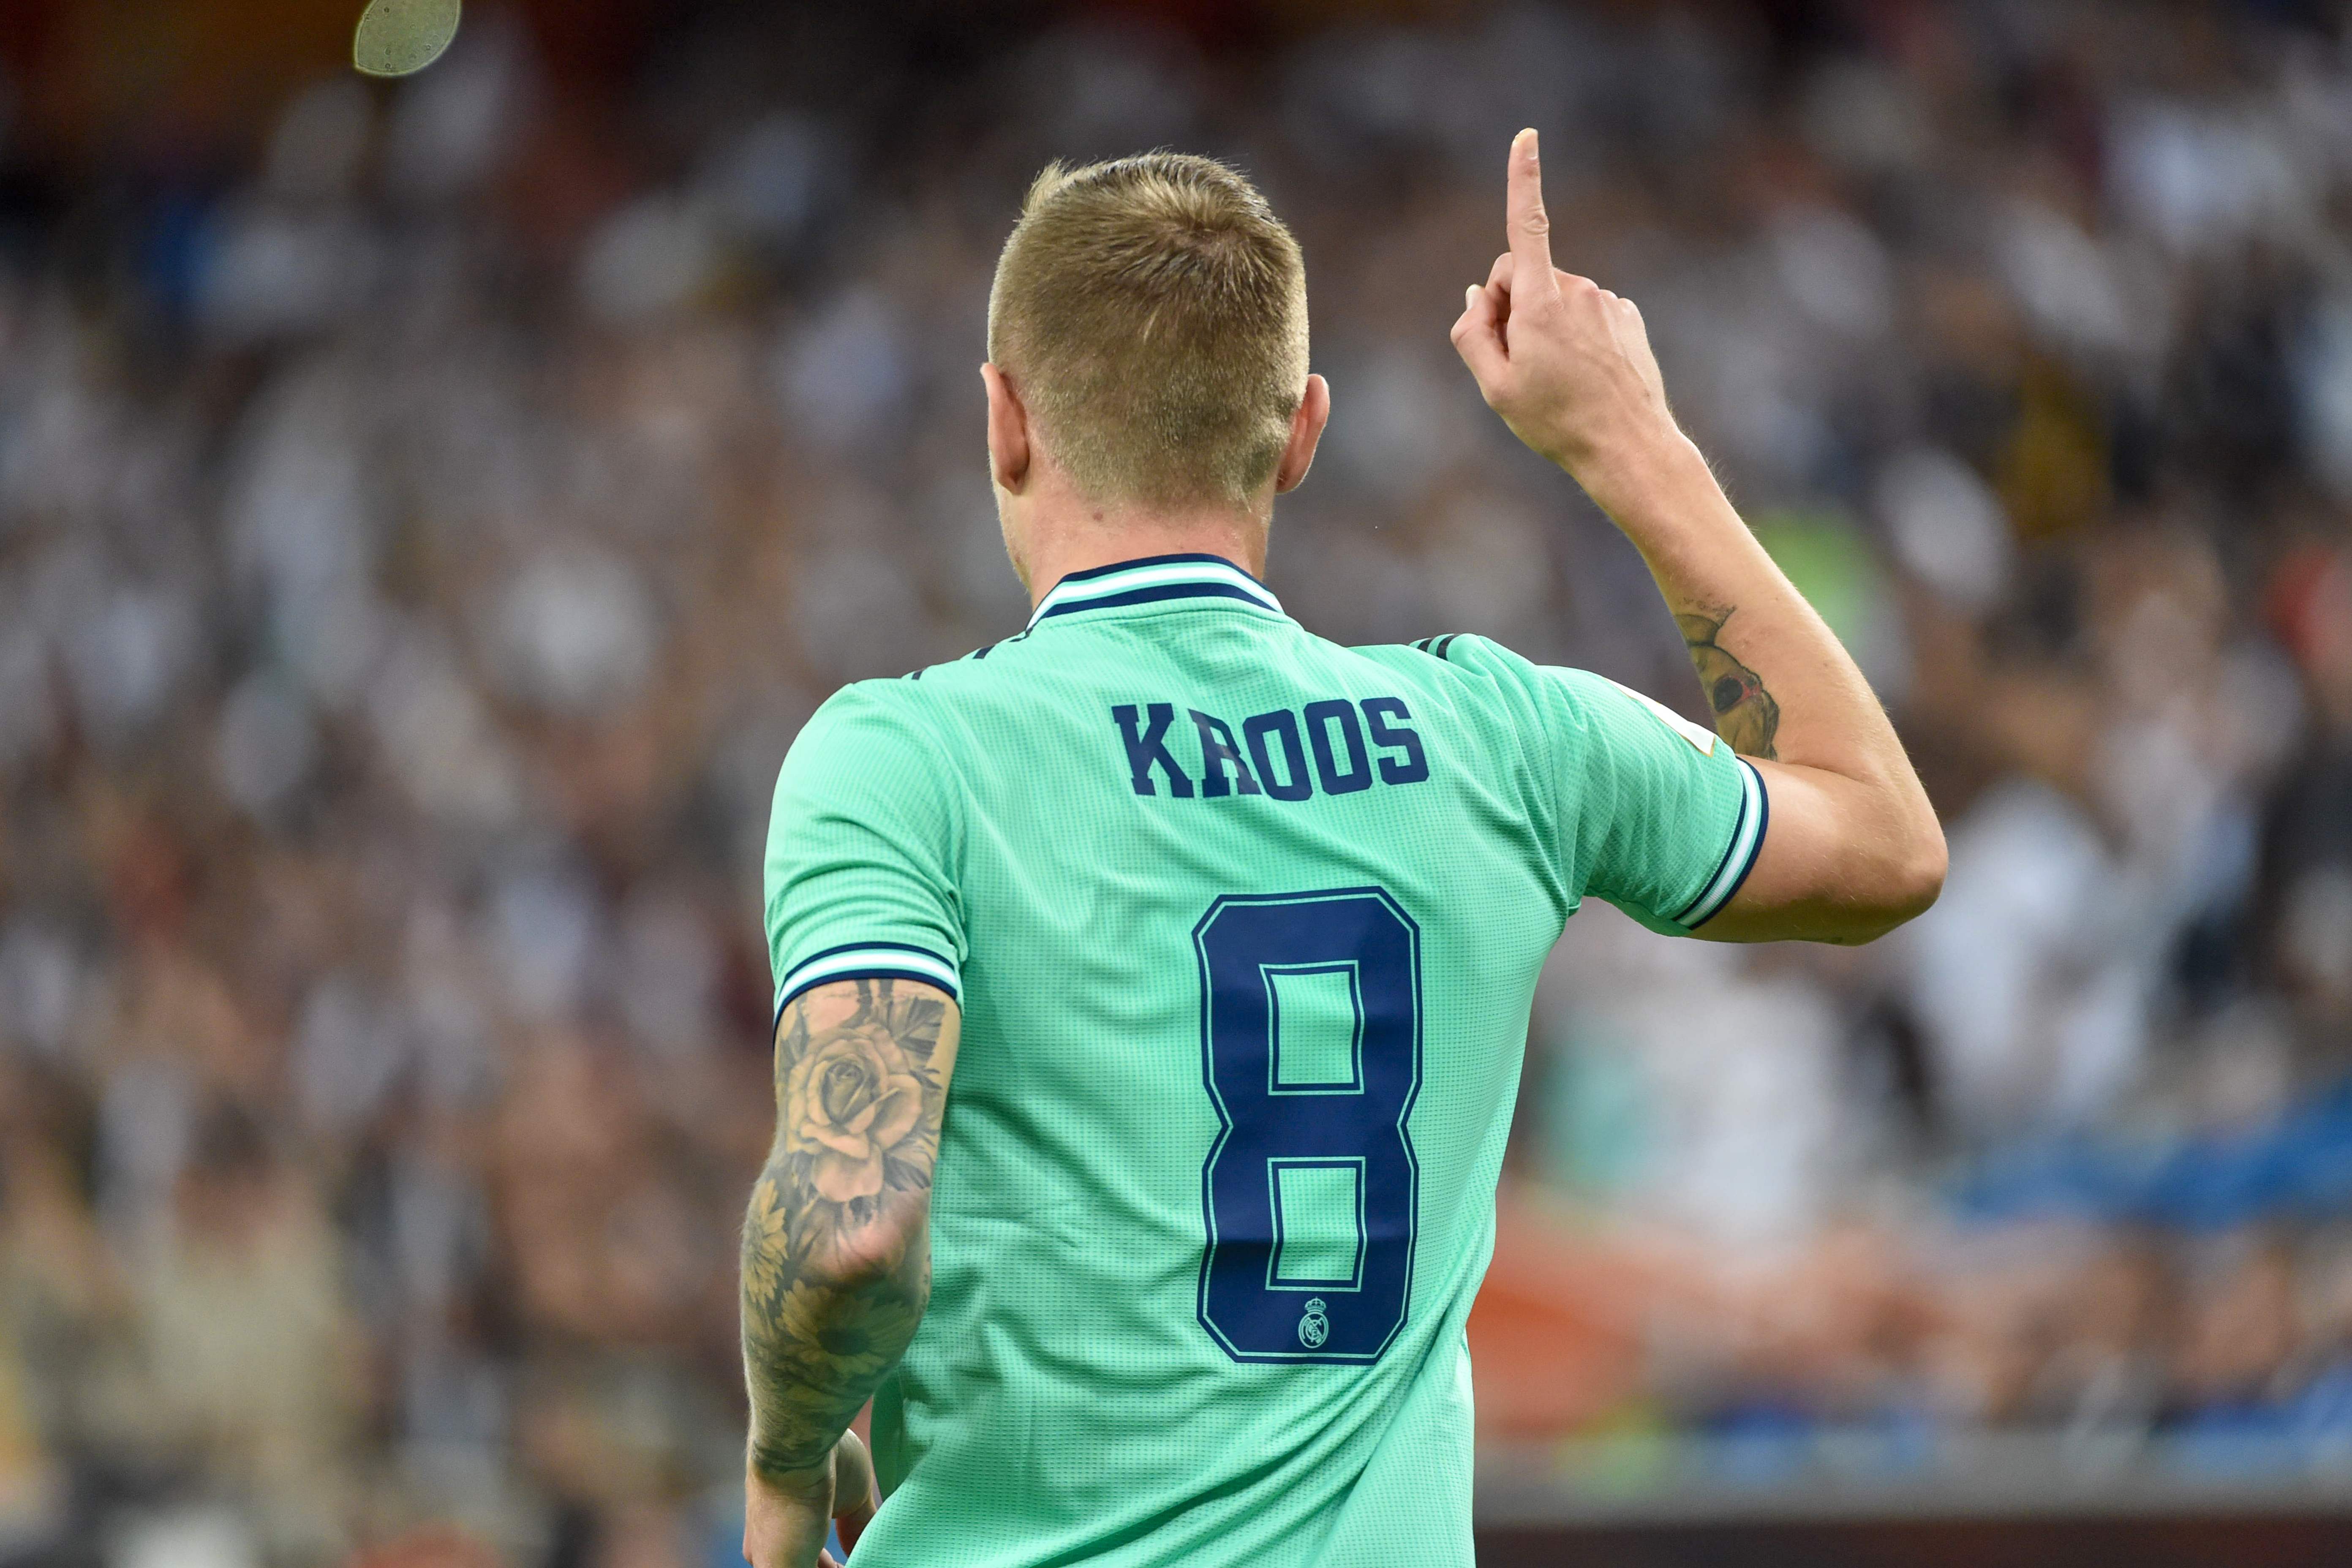 El volante alemán del Real Madrid, Toni Kroos, anotó un golazo contra el Valencia en la semifinal de la Super Copa. (Foto Prensa Libre: AFP)